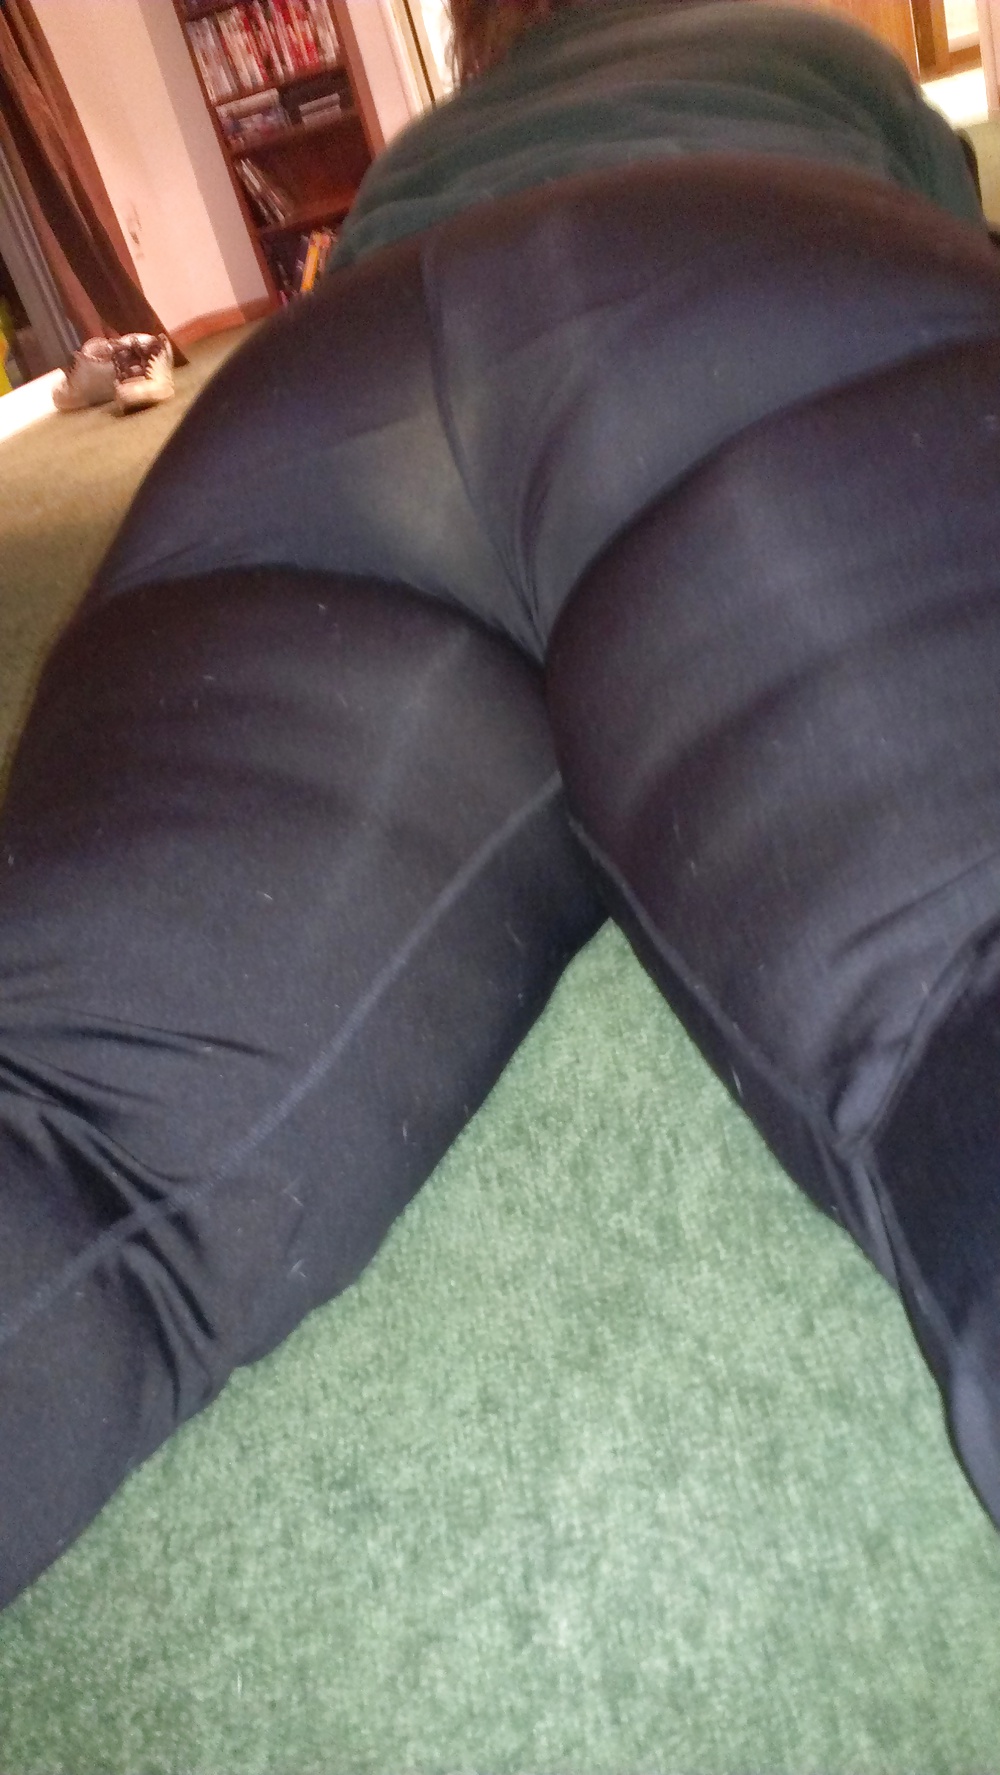 My ass in yiga pants #13137527